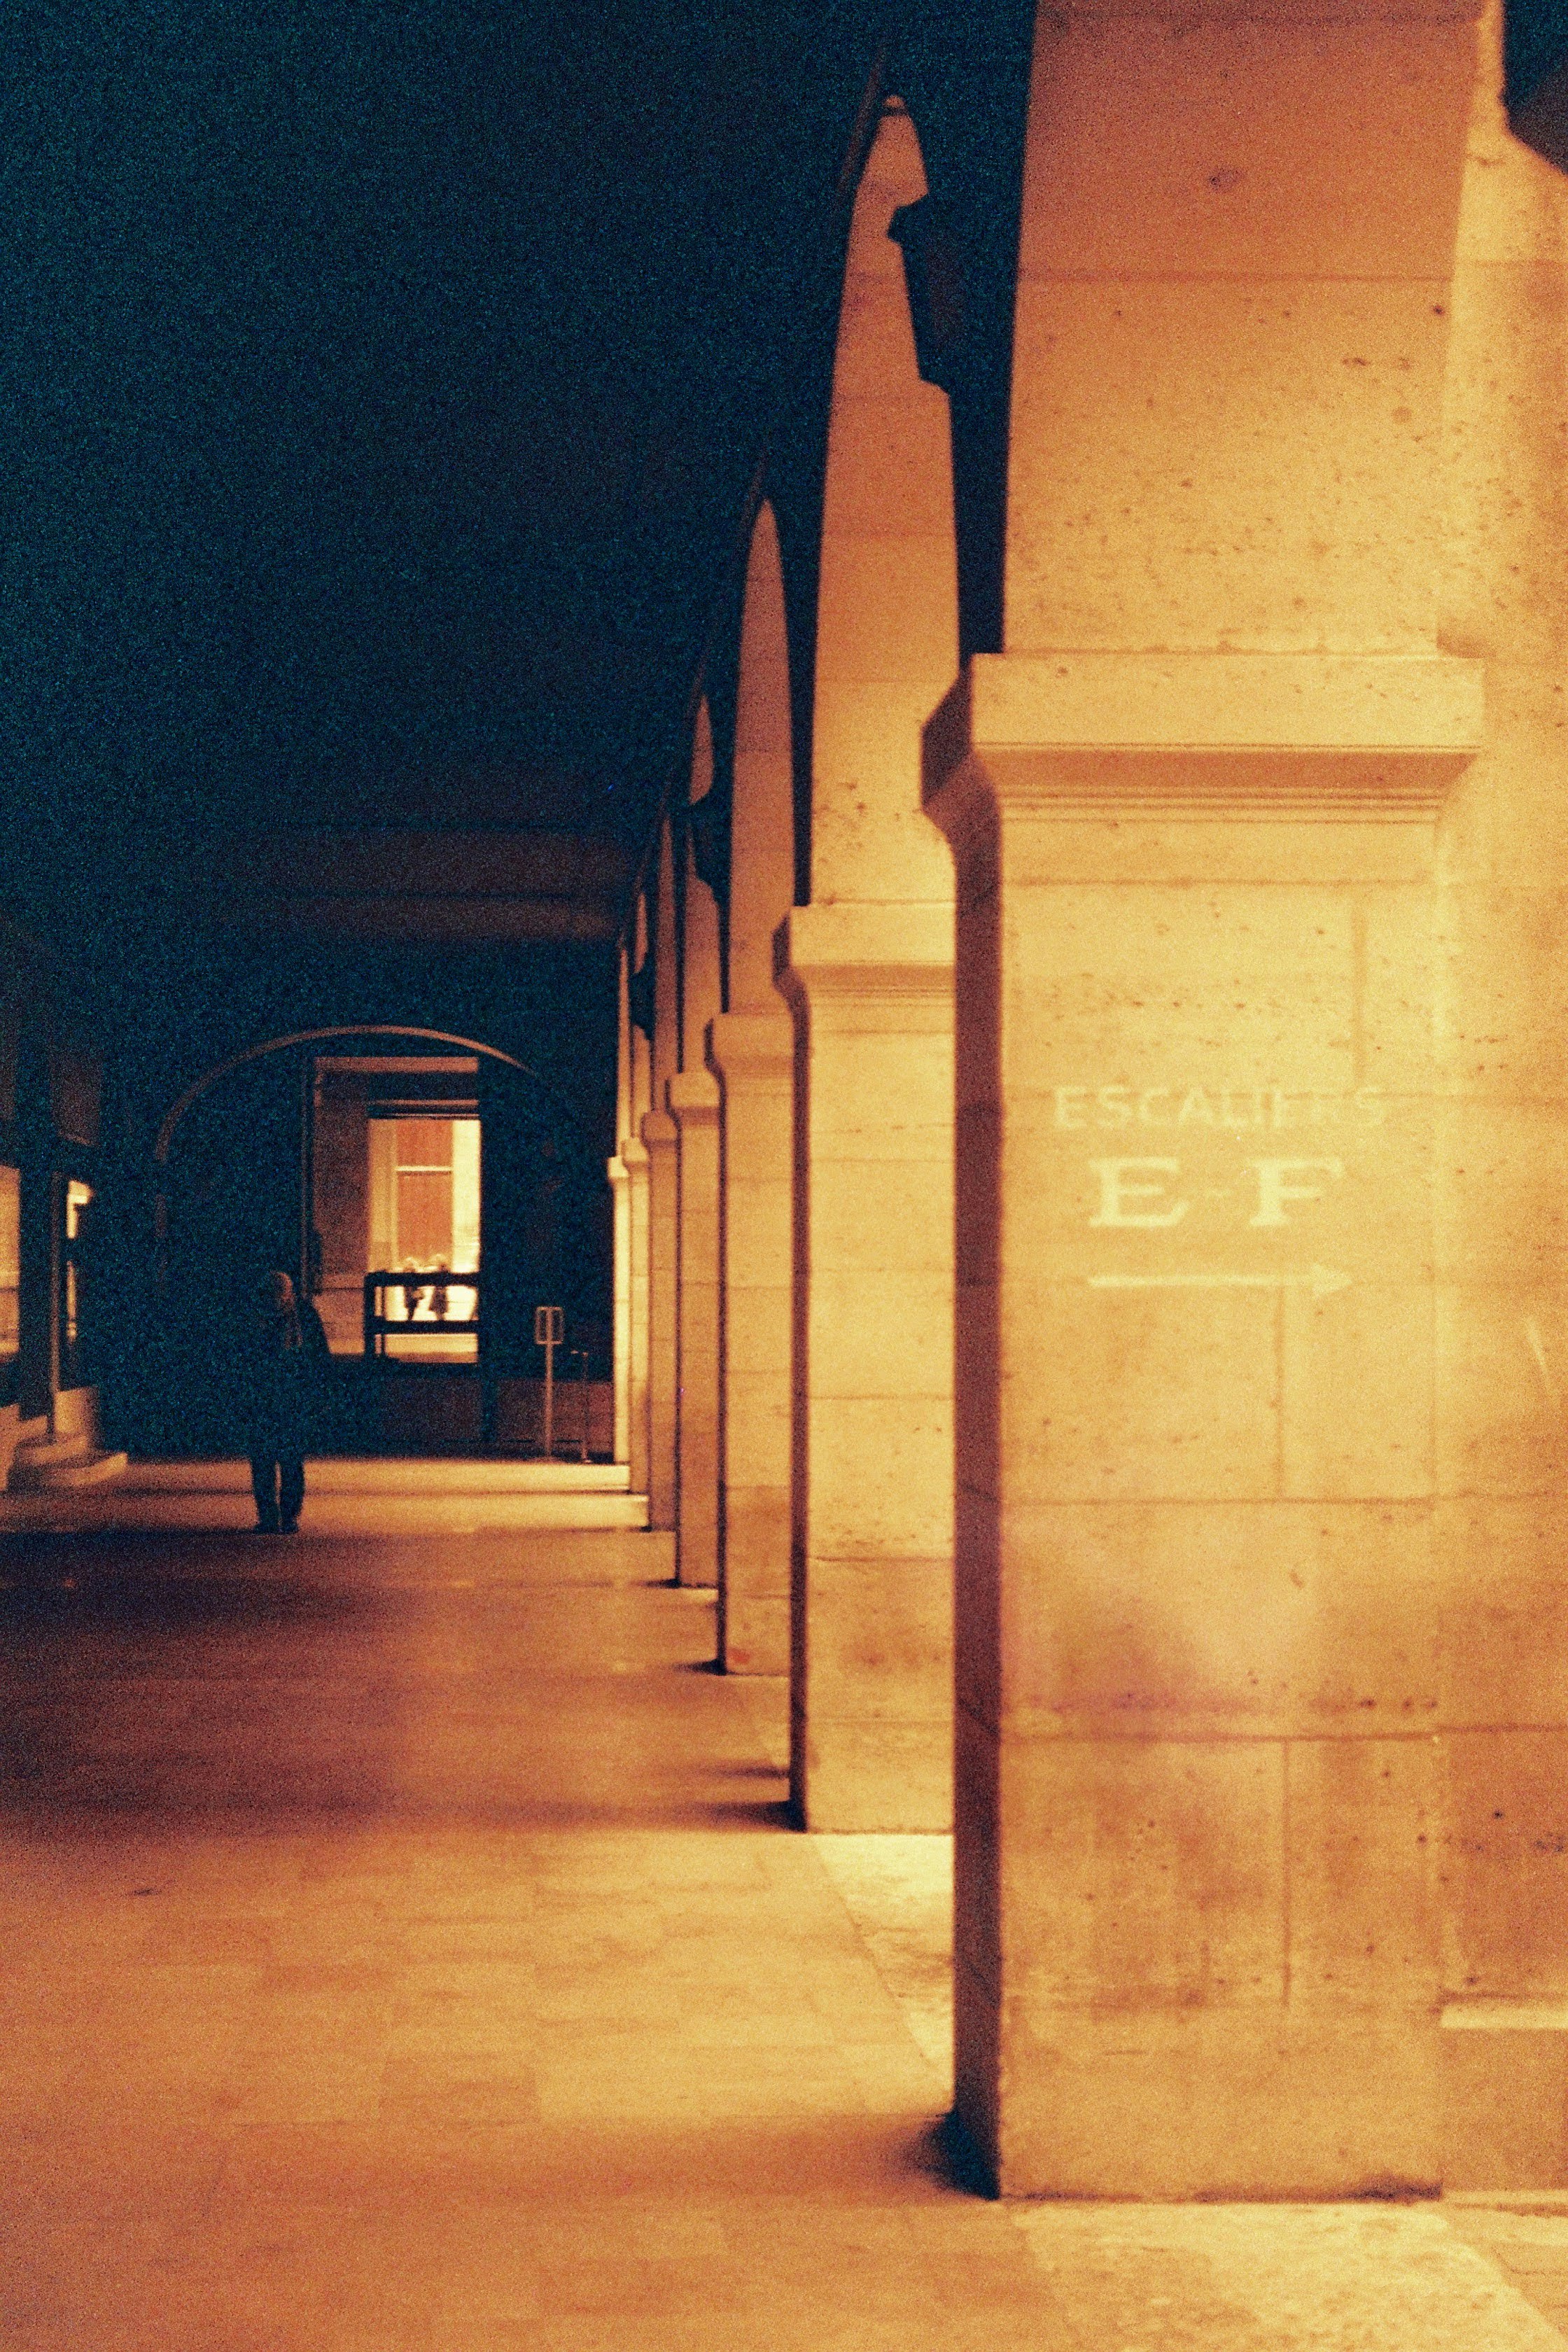 The corridor at Medecine Paris Center University
Shadows, dark silhouette, columns and perspectives